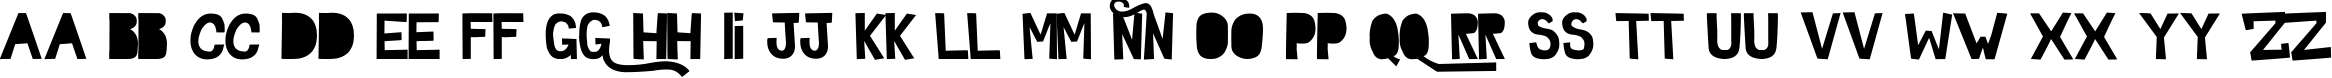 Пример написания английского алфавита шрифтом GhostTown